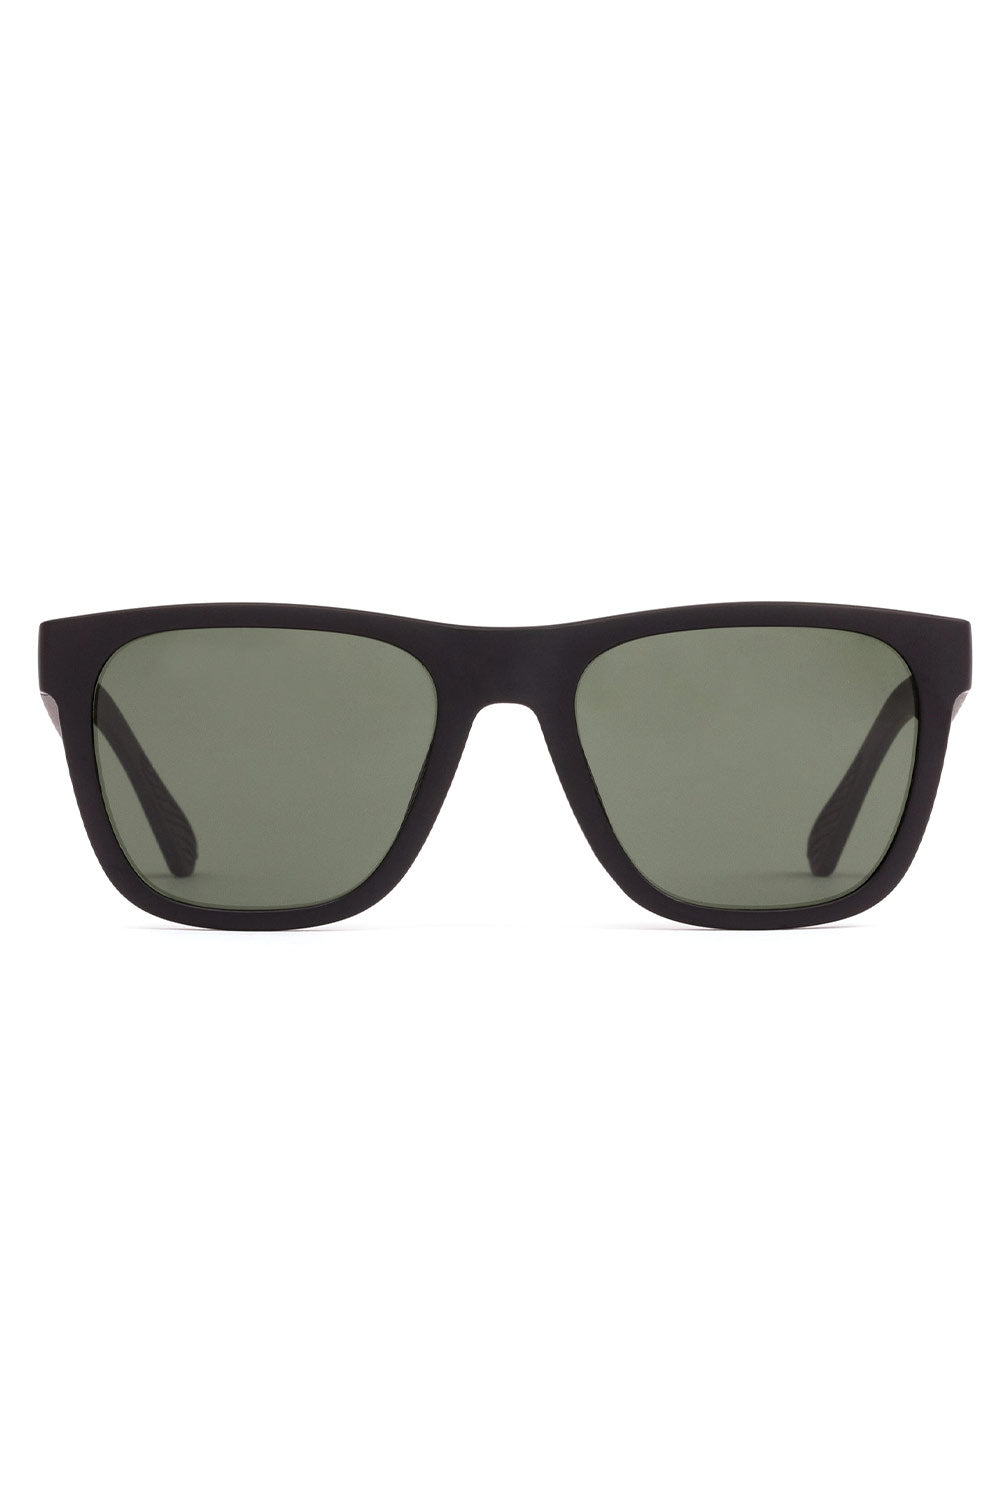 OTIS Eyewear | OTIS Strike Sunglasses